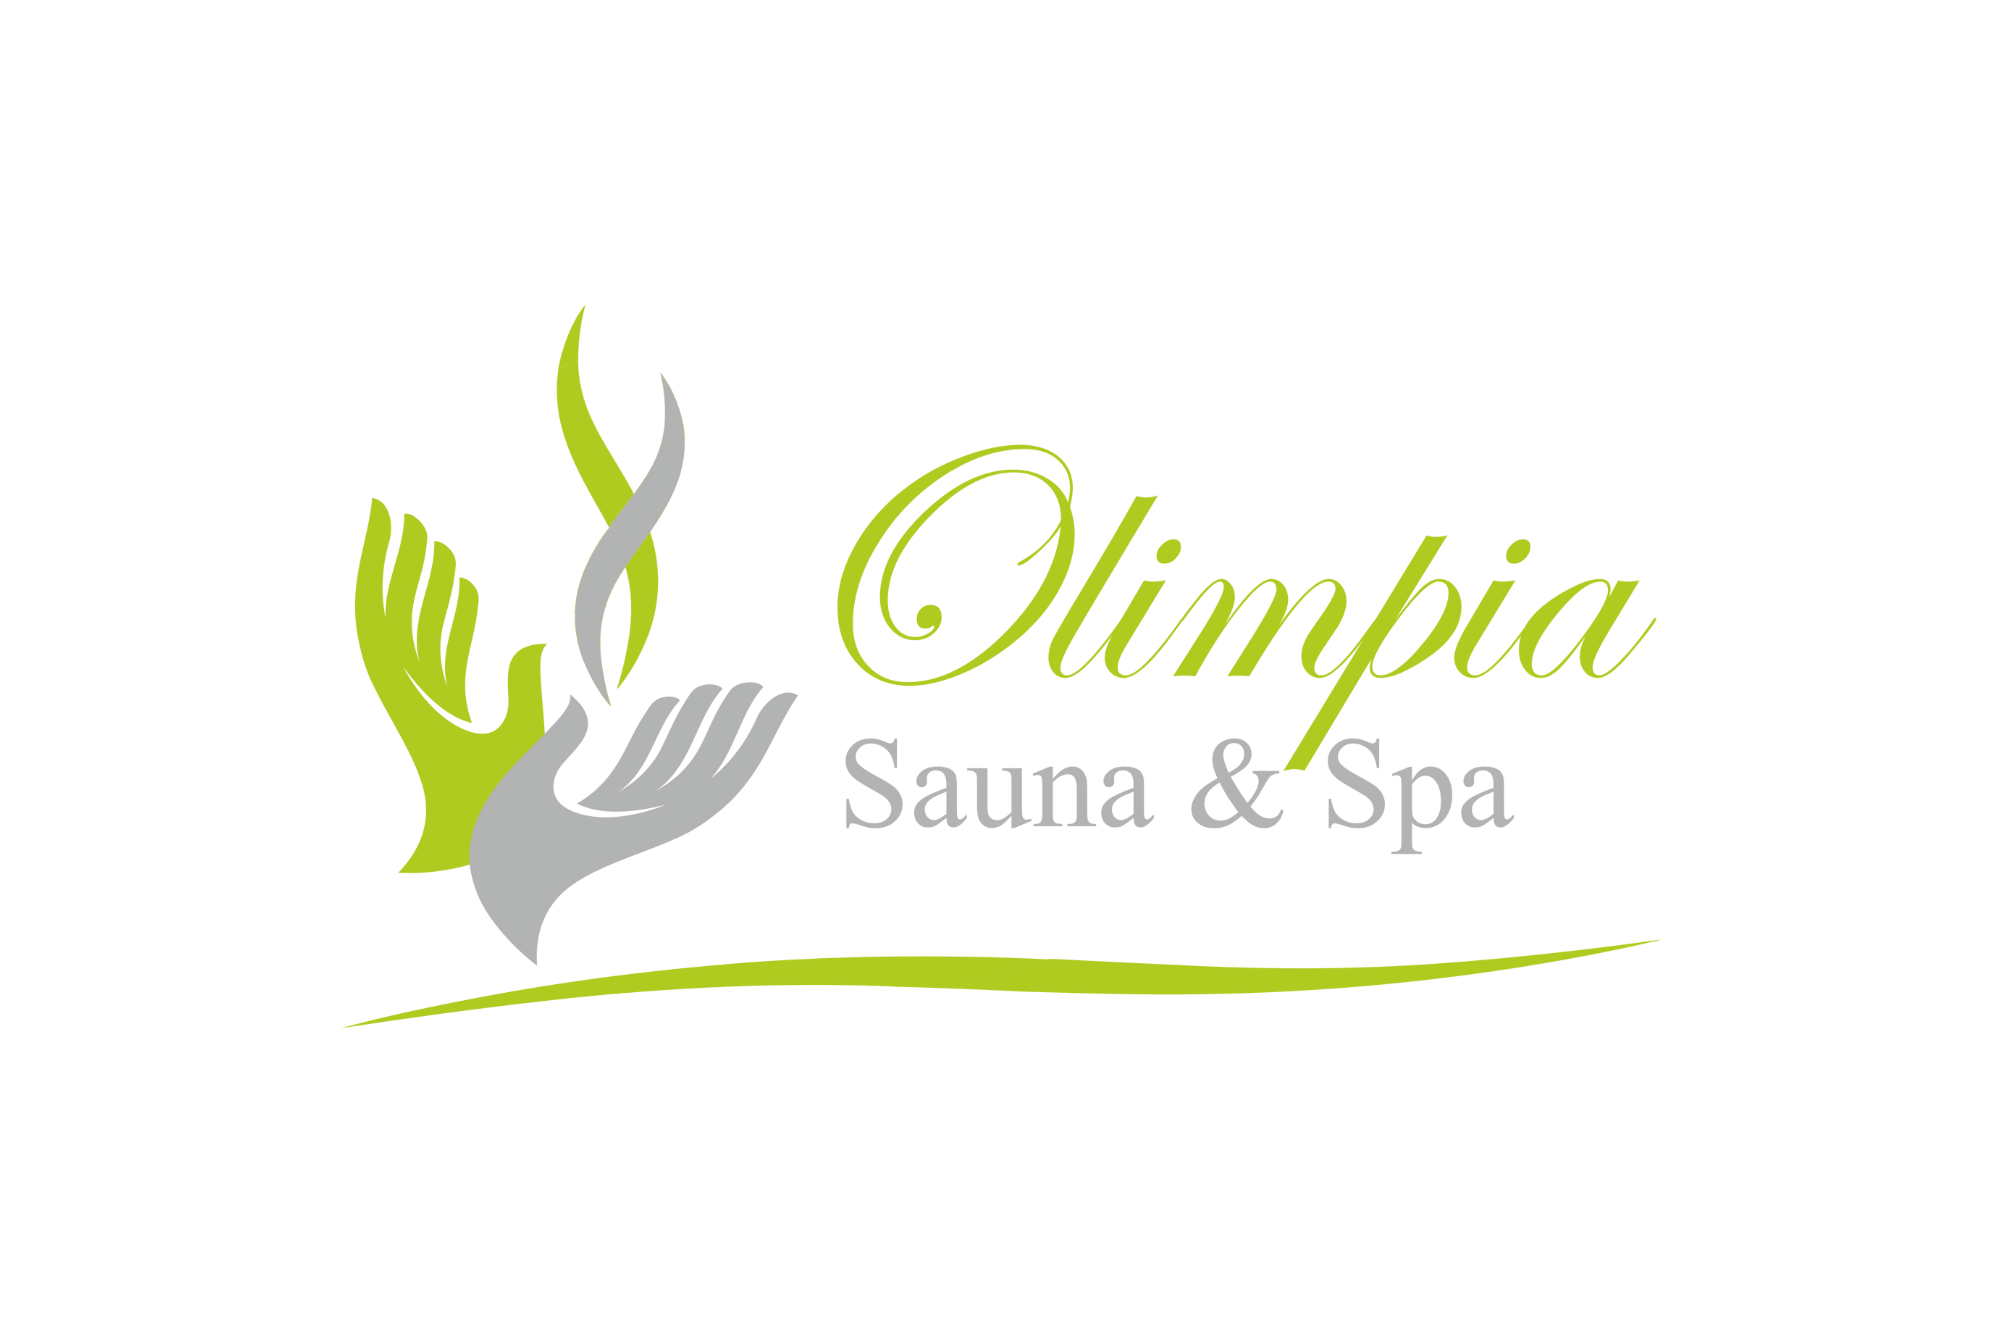 Sauna Olimpia